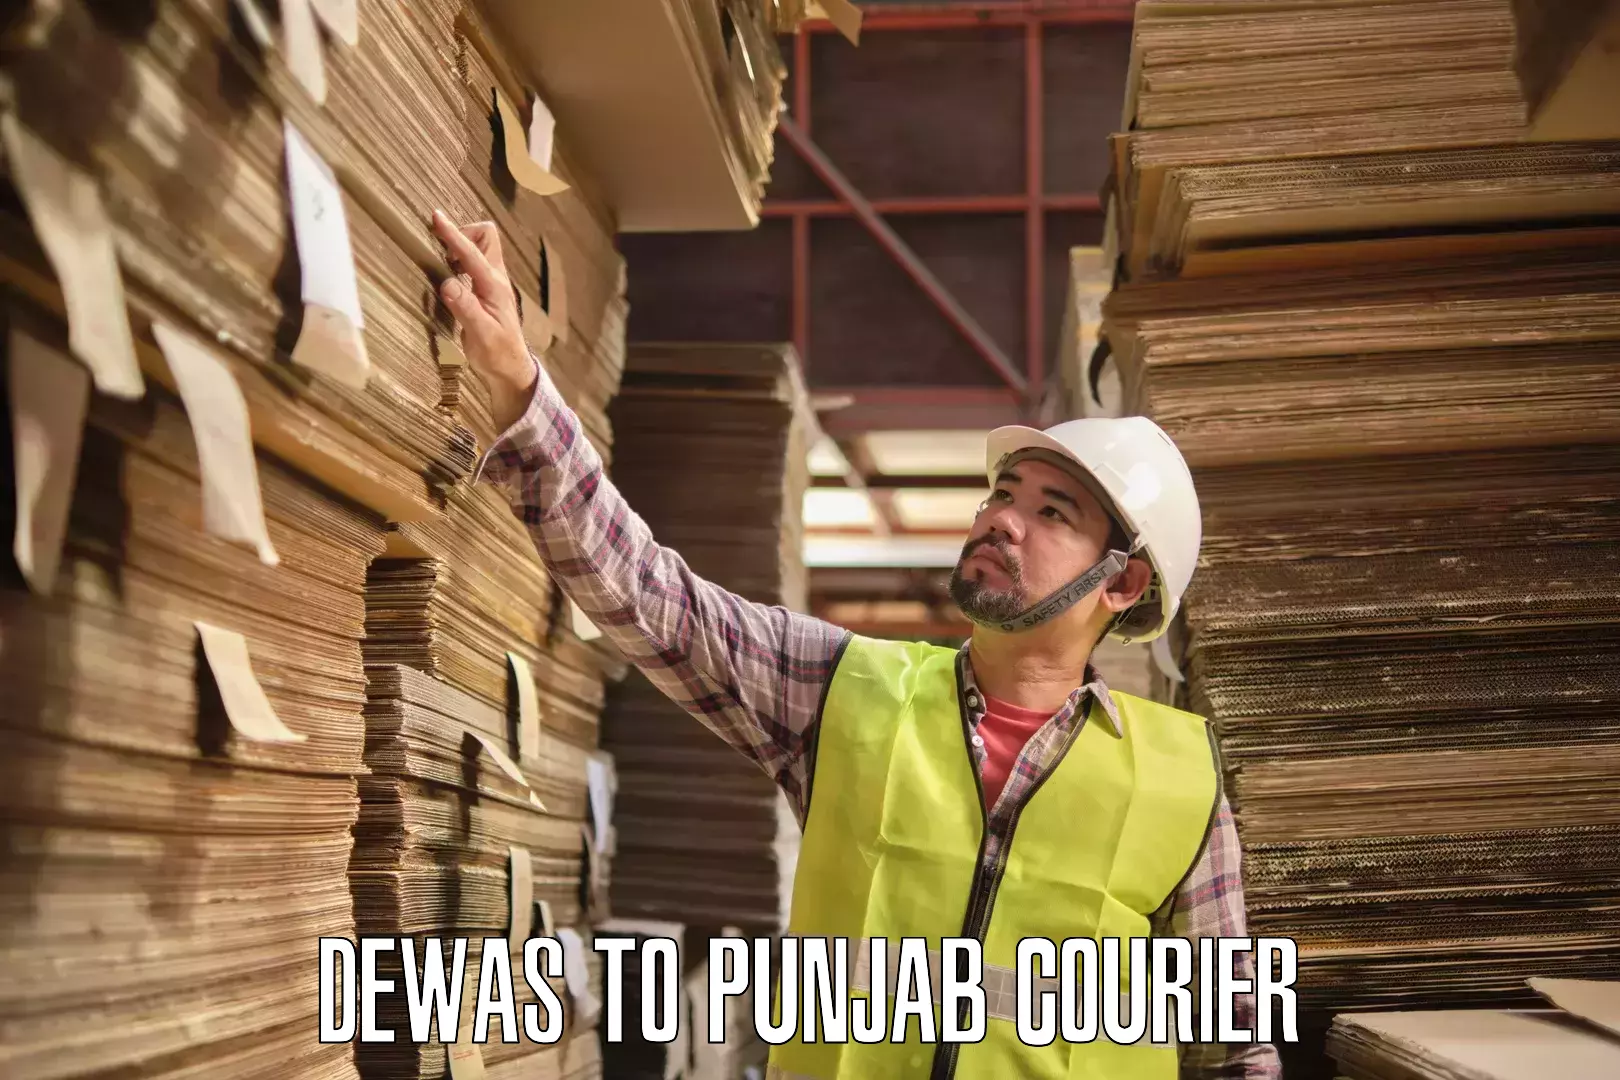 24-hour courier service Dewas to Punjab